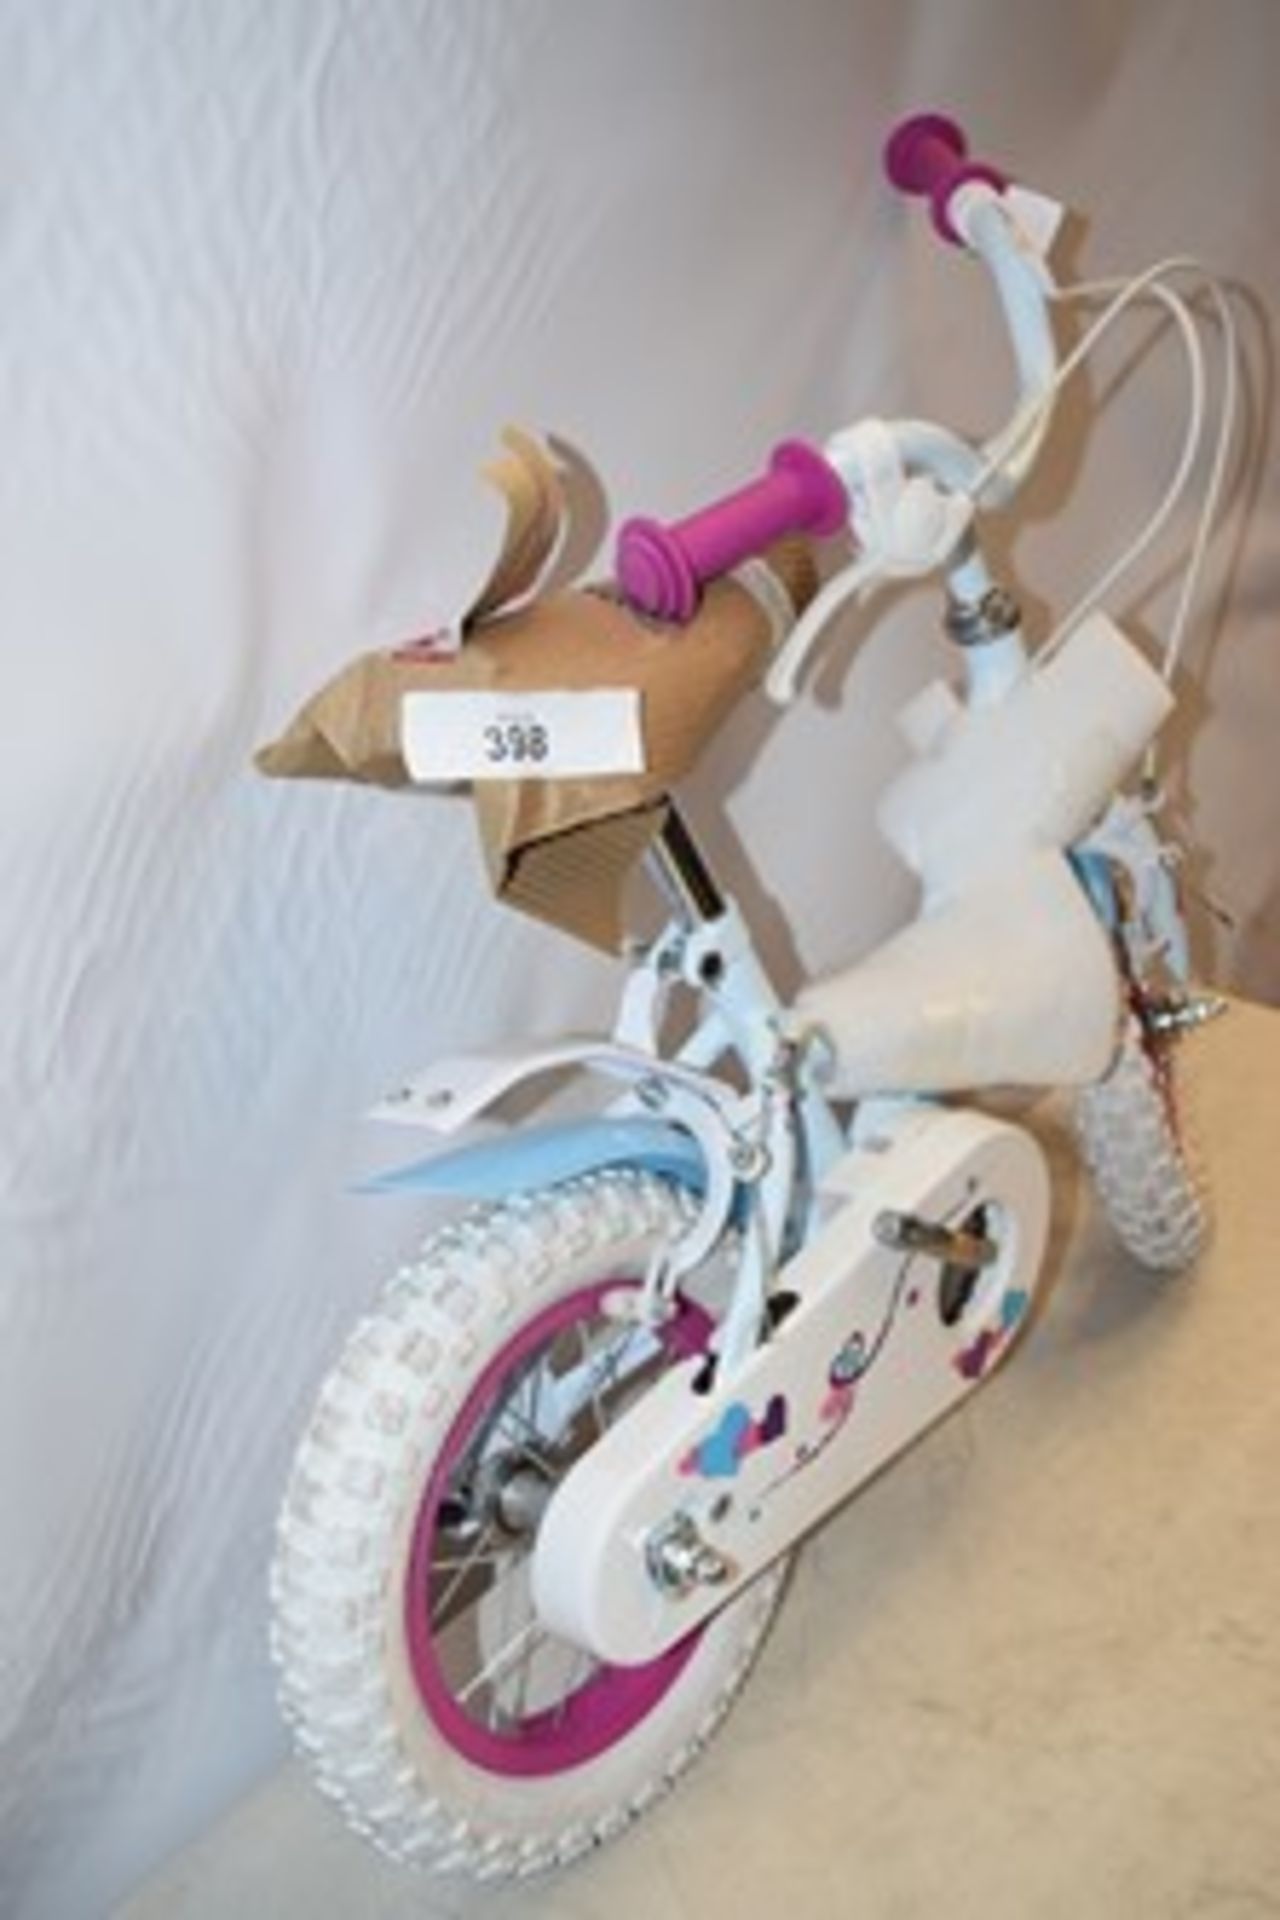 1 x Dawes Princess girls bike - New, slightly dirty due to storage (ES13) - Image 3 of 3